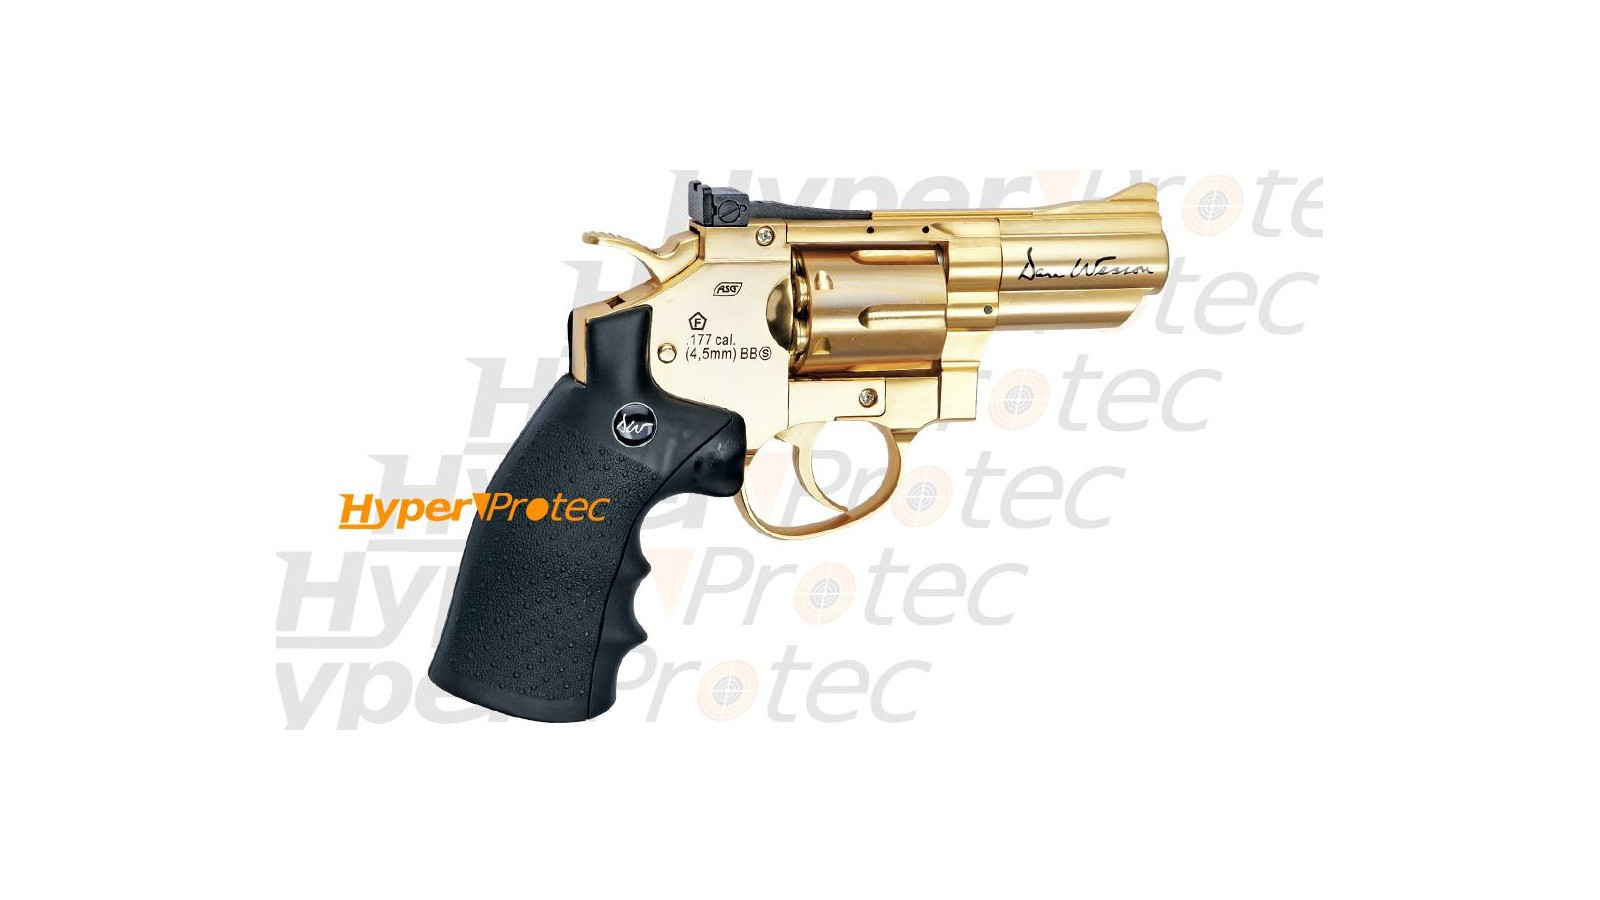 Pistolet à blanc ou gaz GPDA - BROWNING - Doré